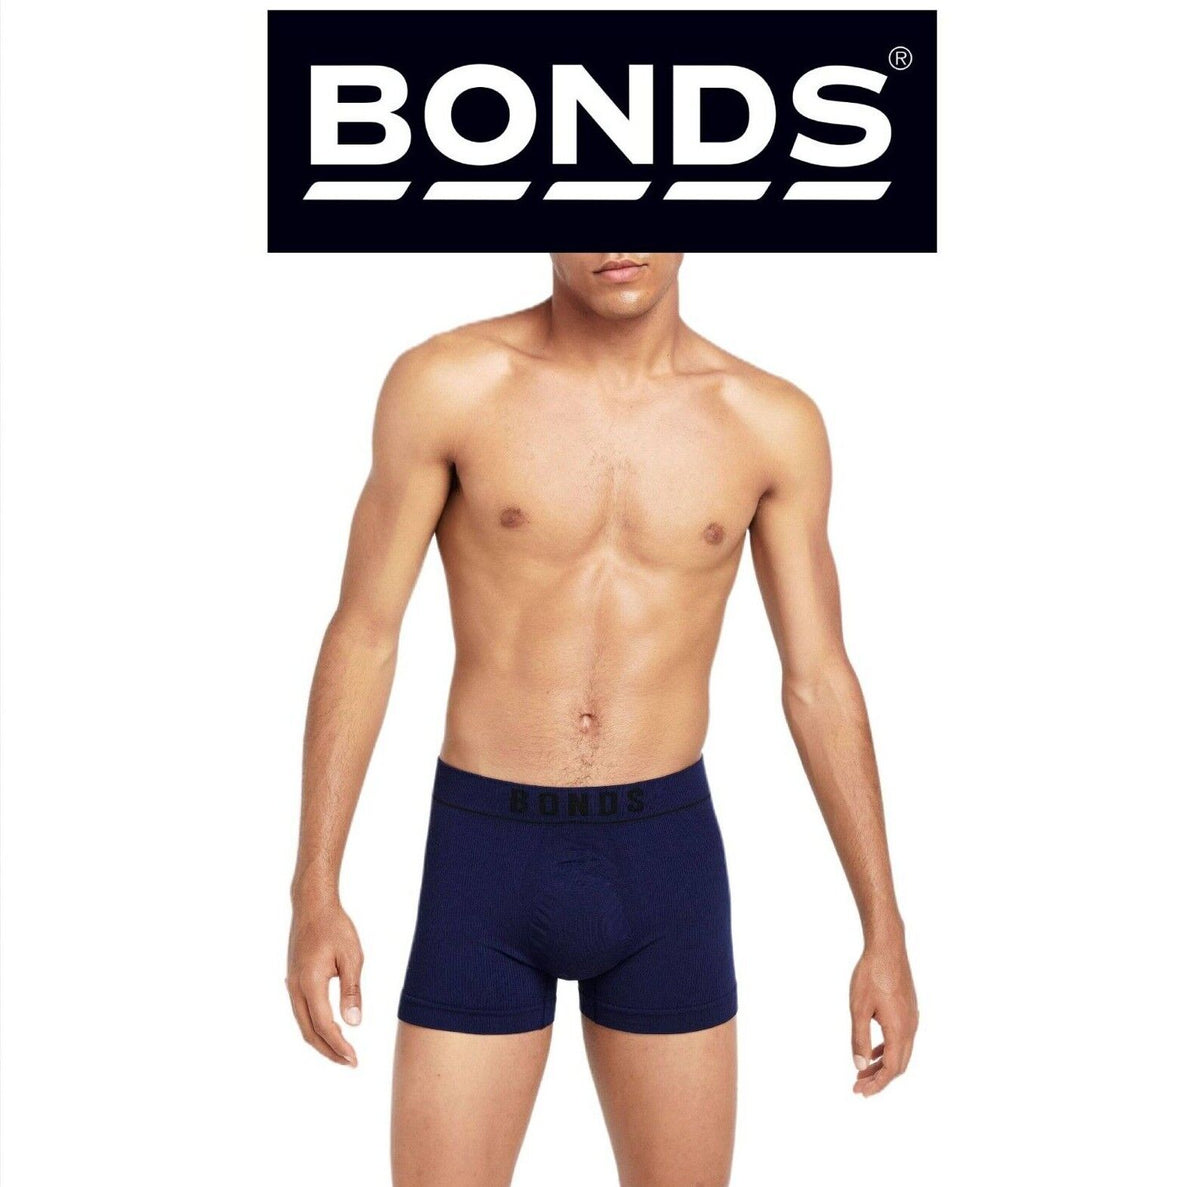 Bonds Mens Original Seamless Trunk Seams Design for Maximum Comfort MXBA